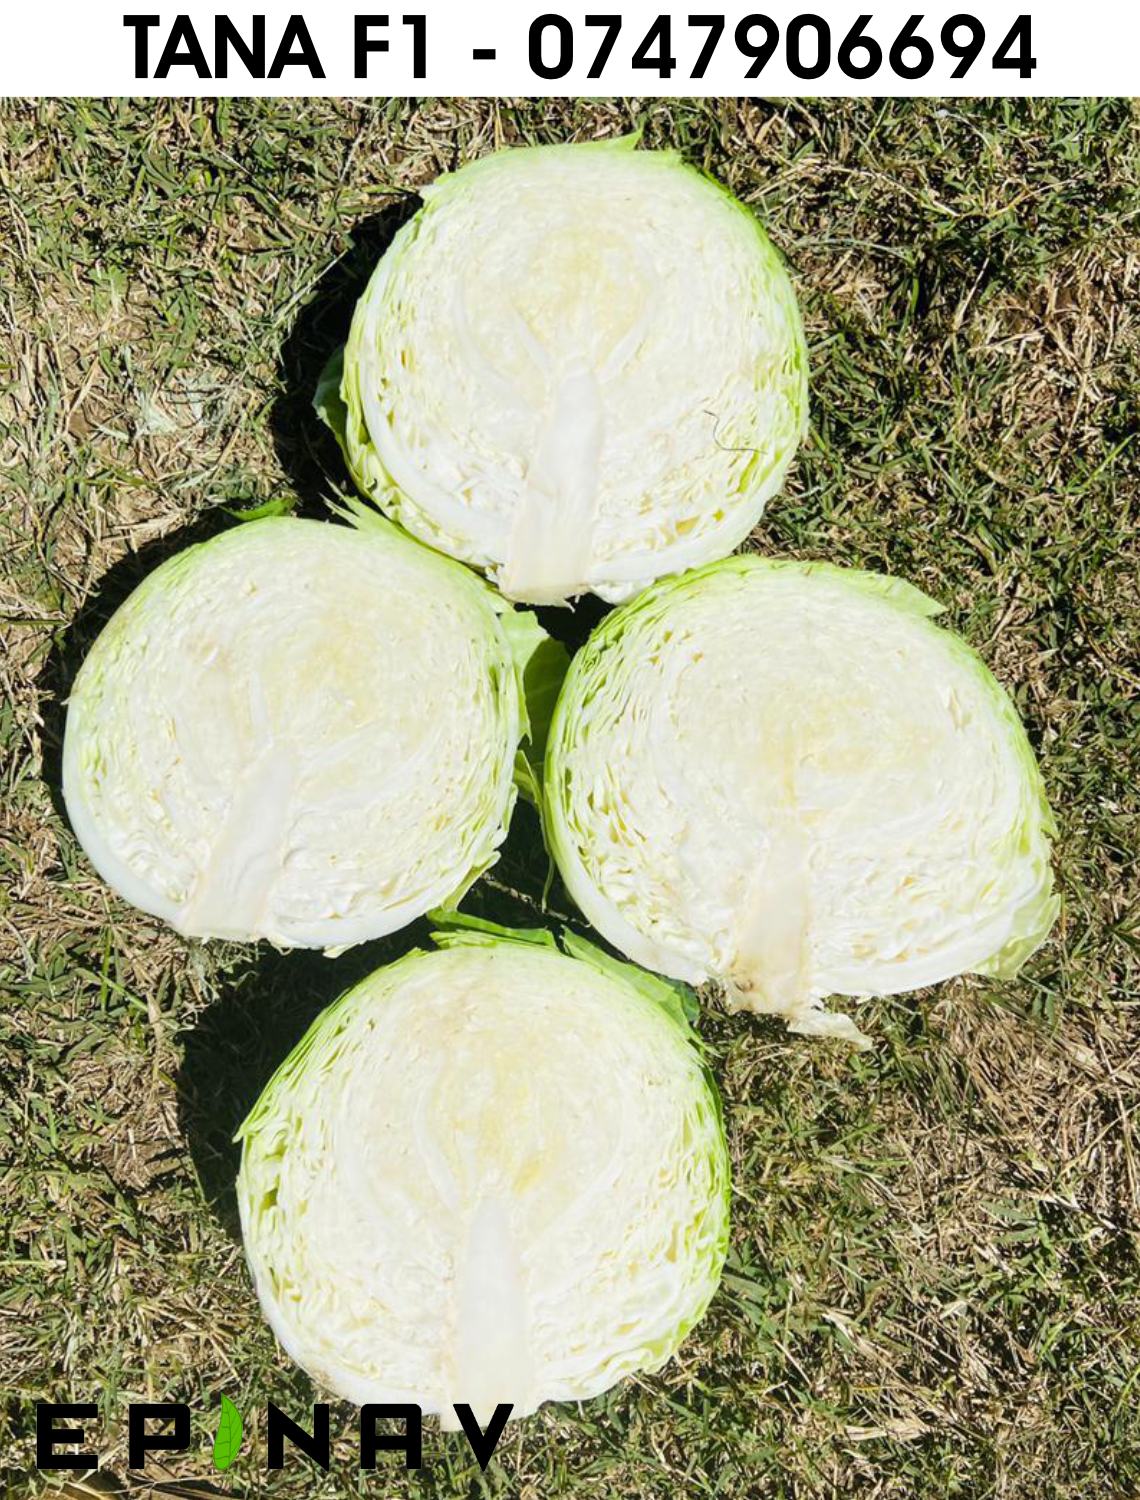 The new Hybrid Cabbage Seeds TANA F1 